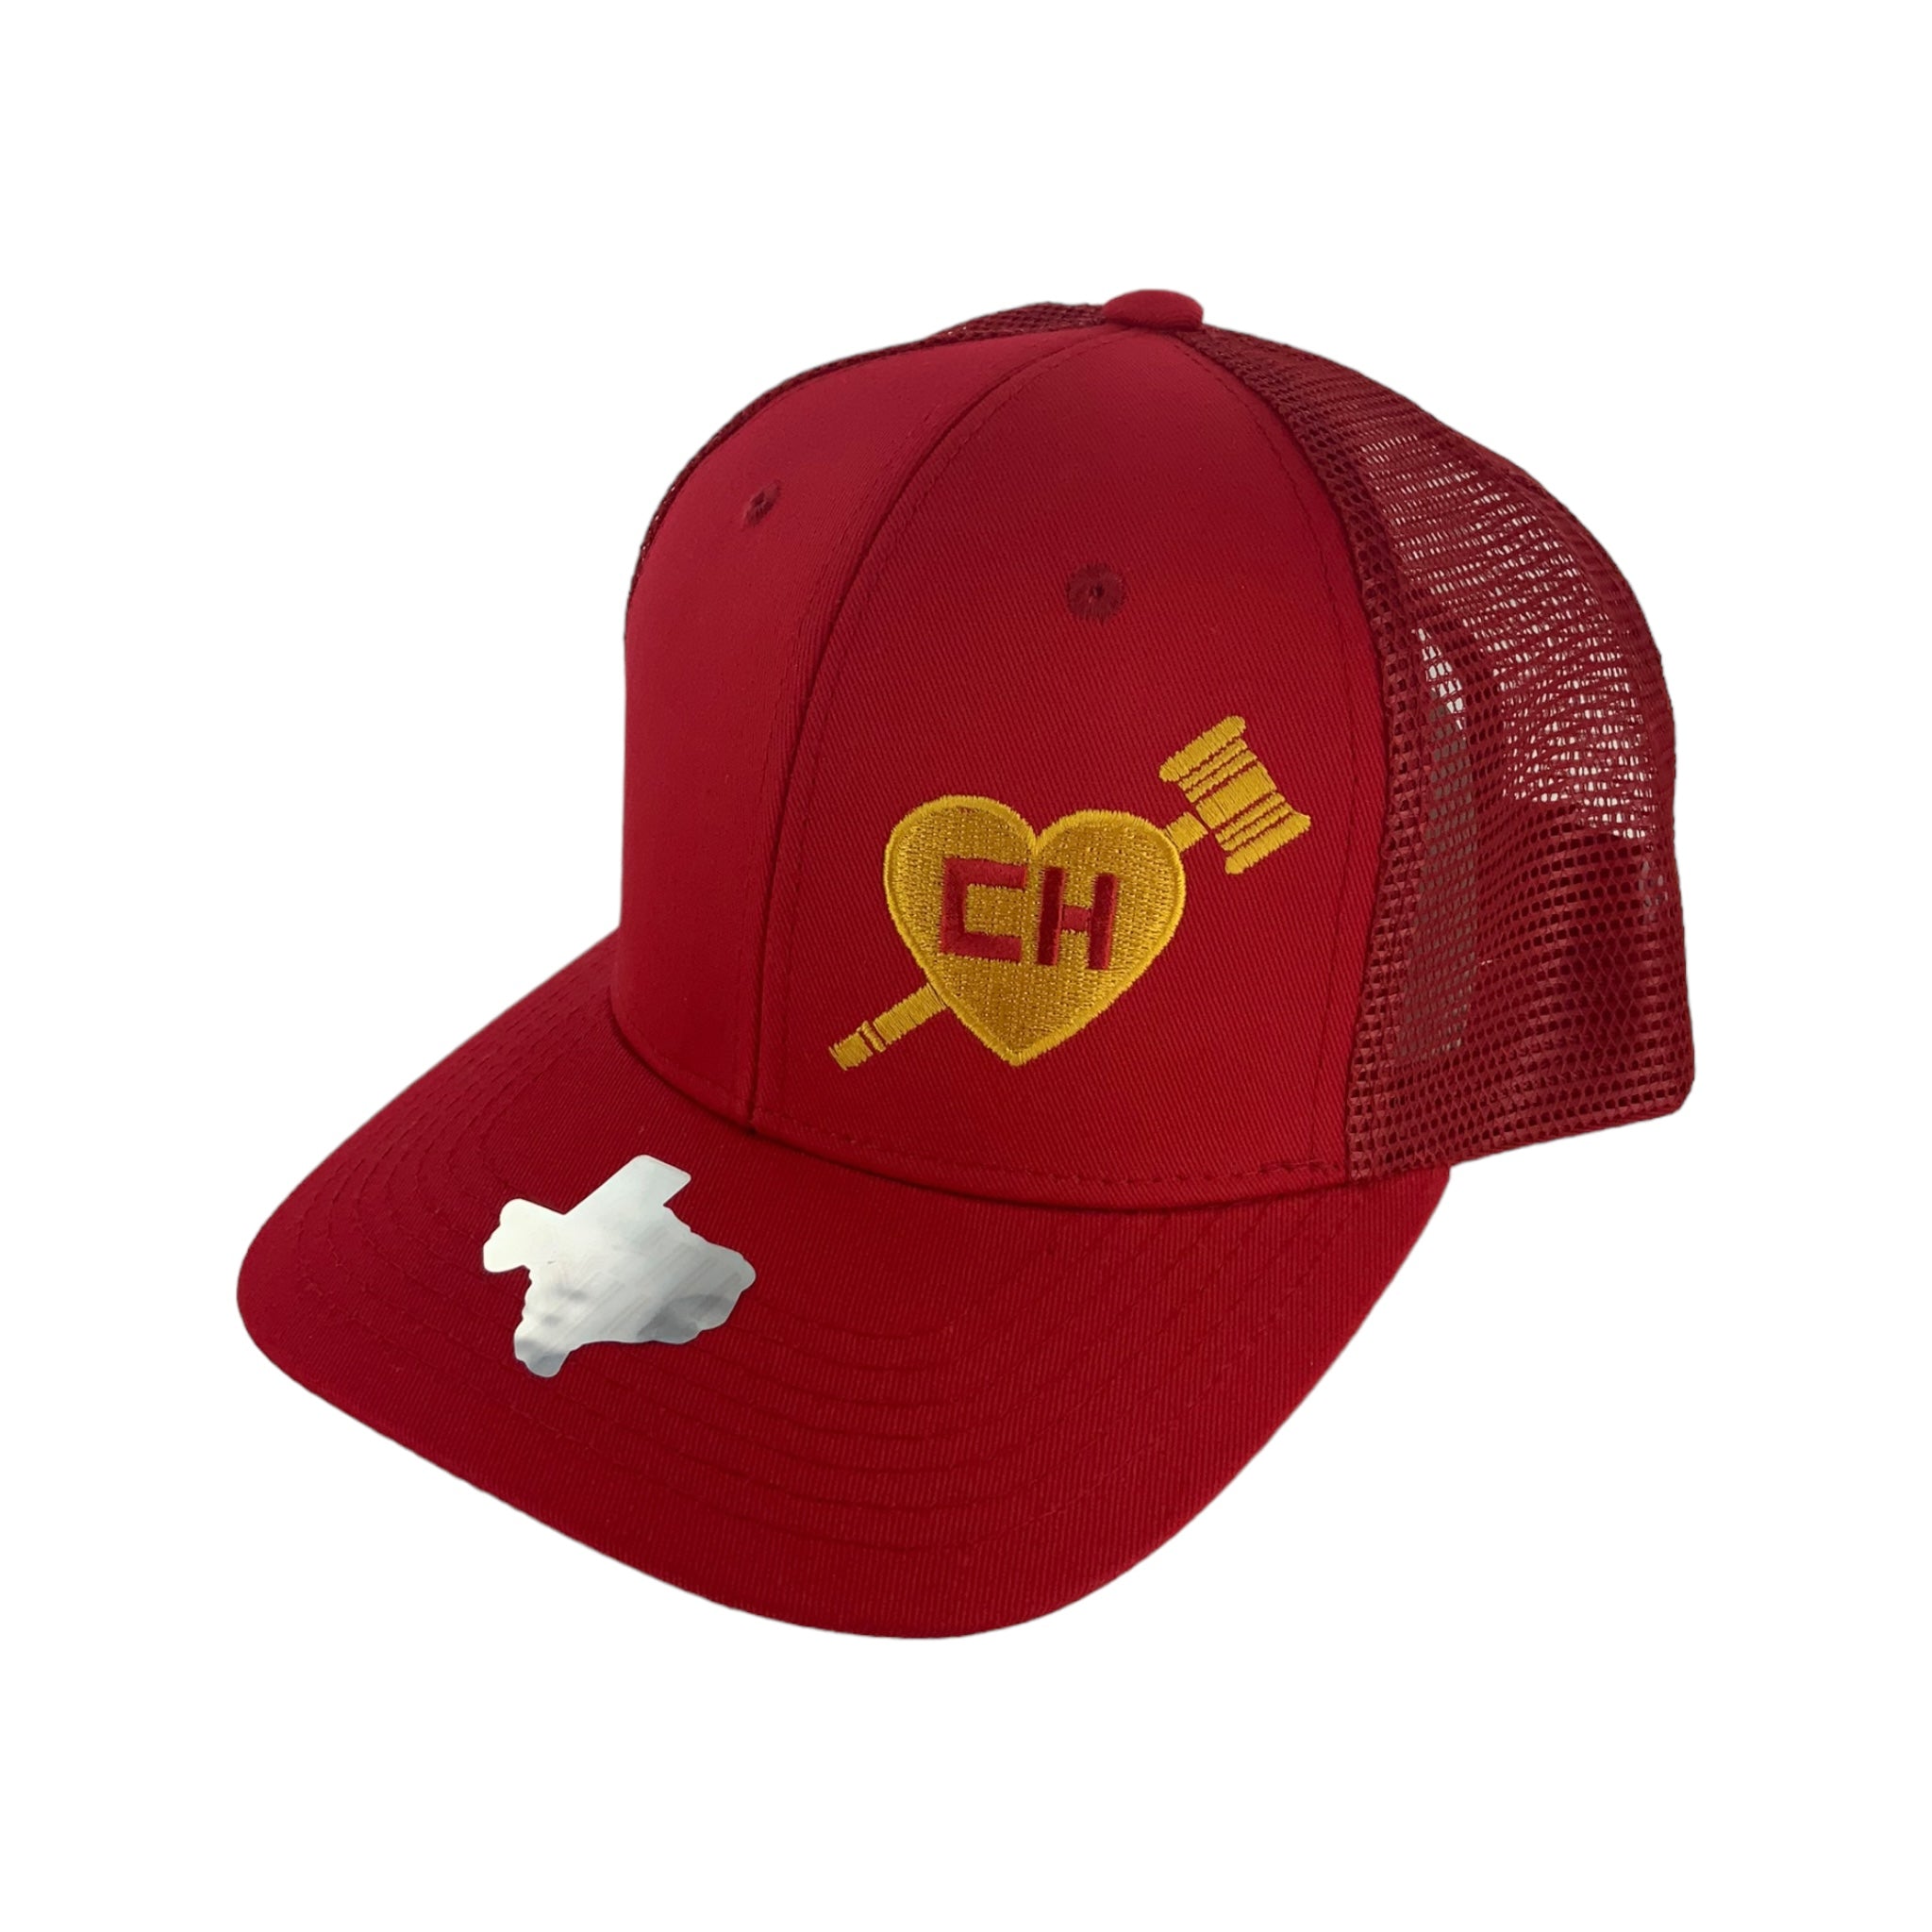 Hat Republic Chapulin Snapback Red Yellow OSFM